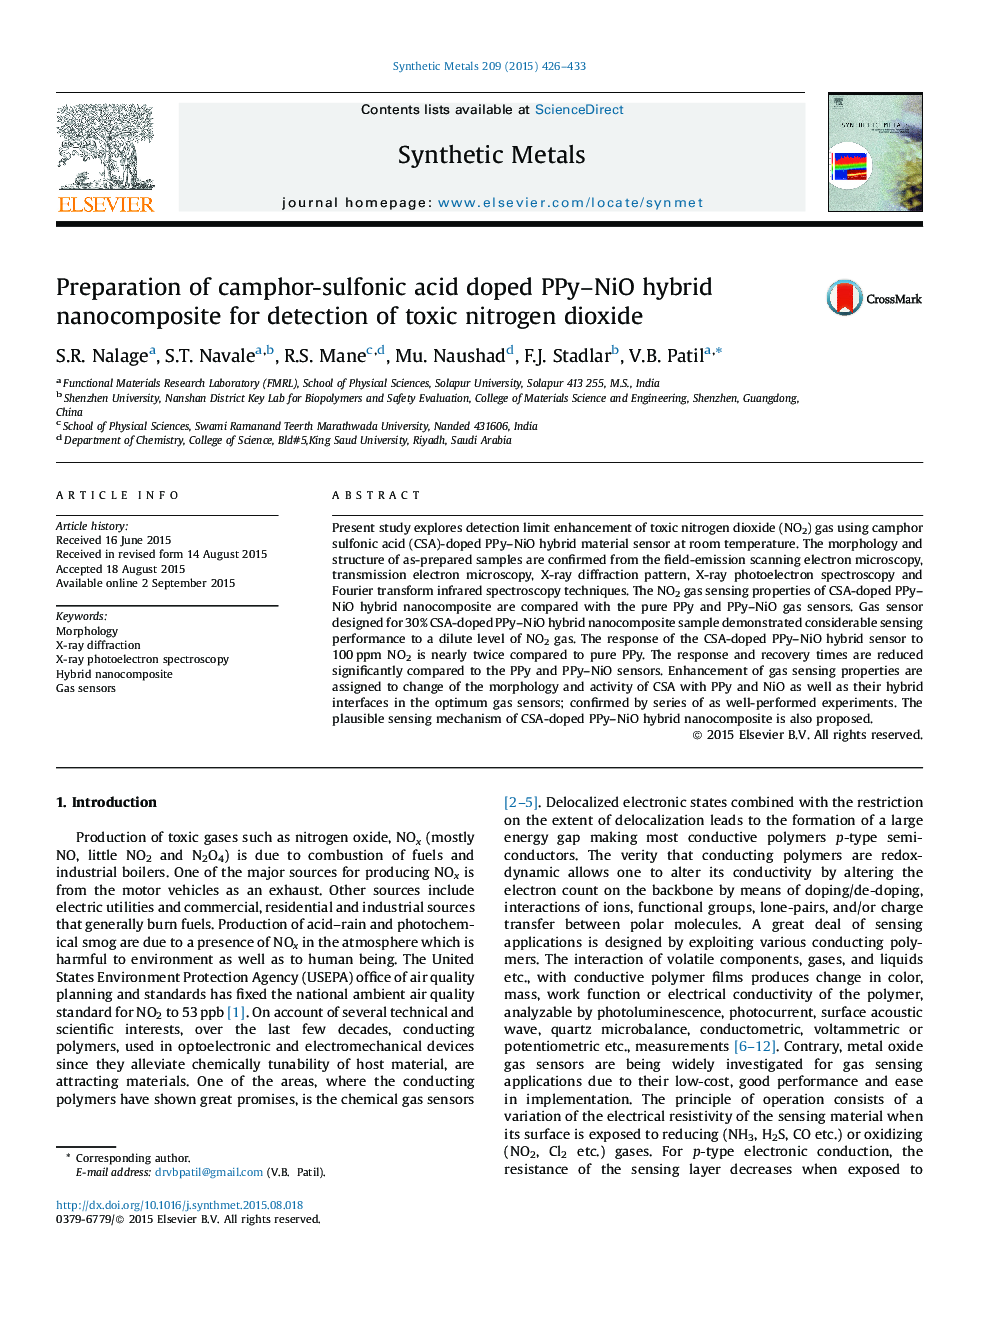 Preparation of camphor-sulfonic acid doped PPy–NiO hybrid nanocomposite for detection of toxic nitrogen dioxide